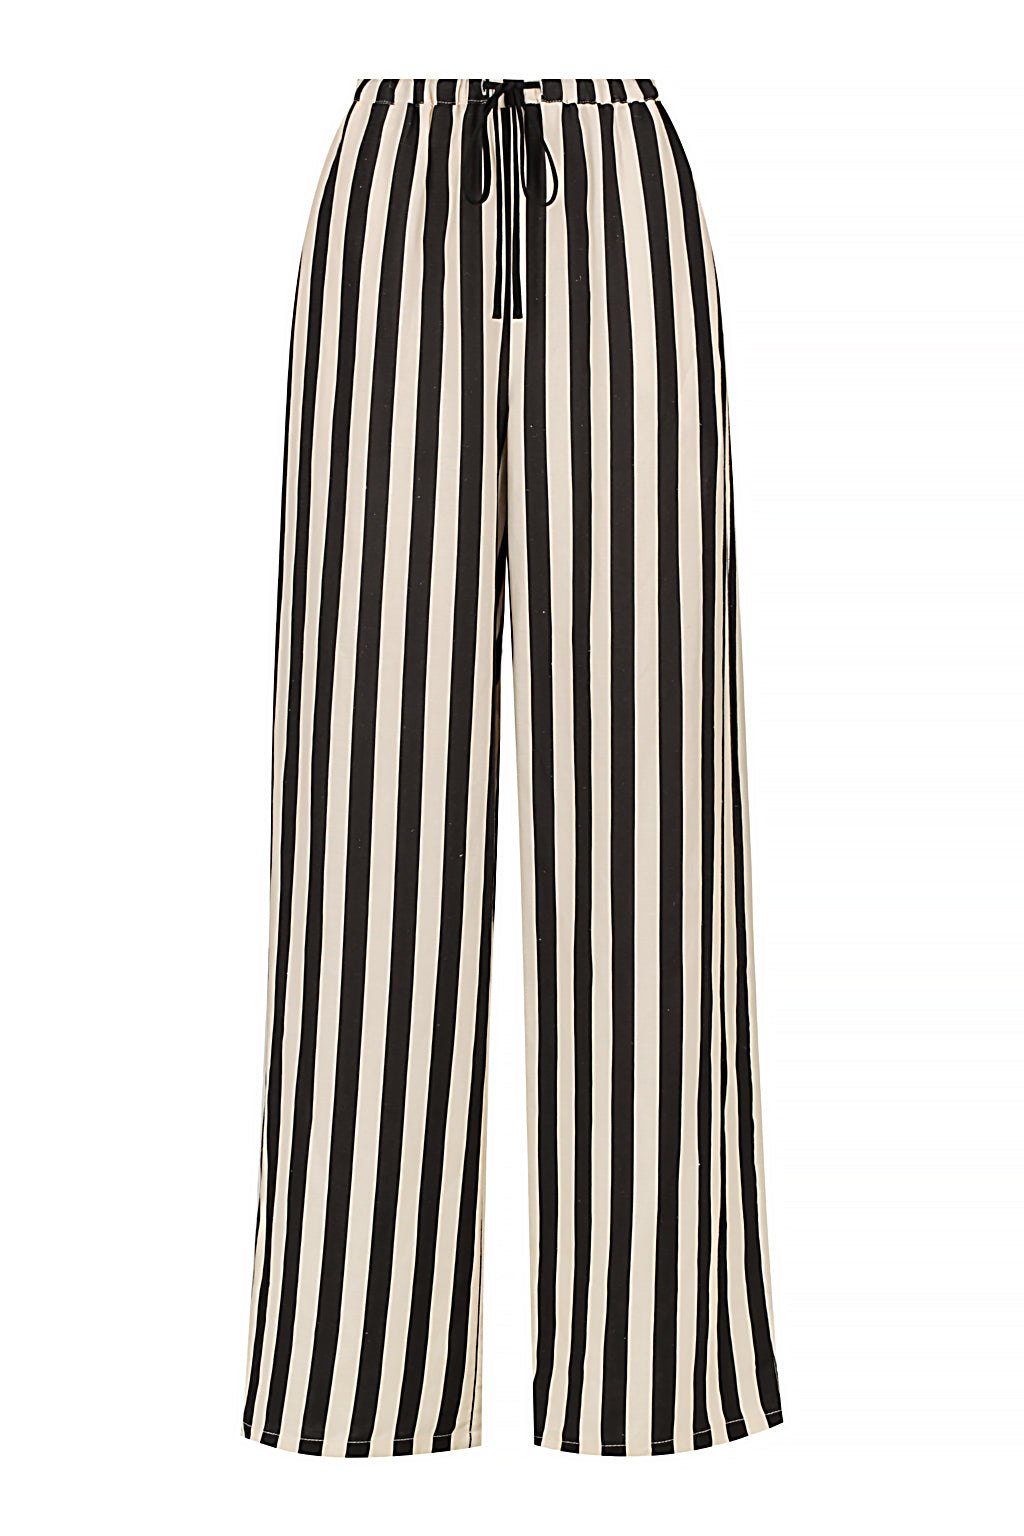 Bisk the Label Josie stripe linen pull on pant